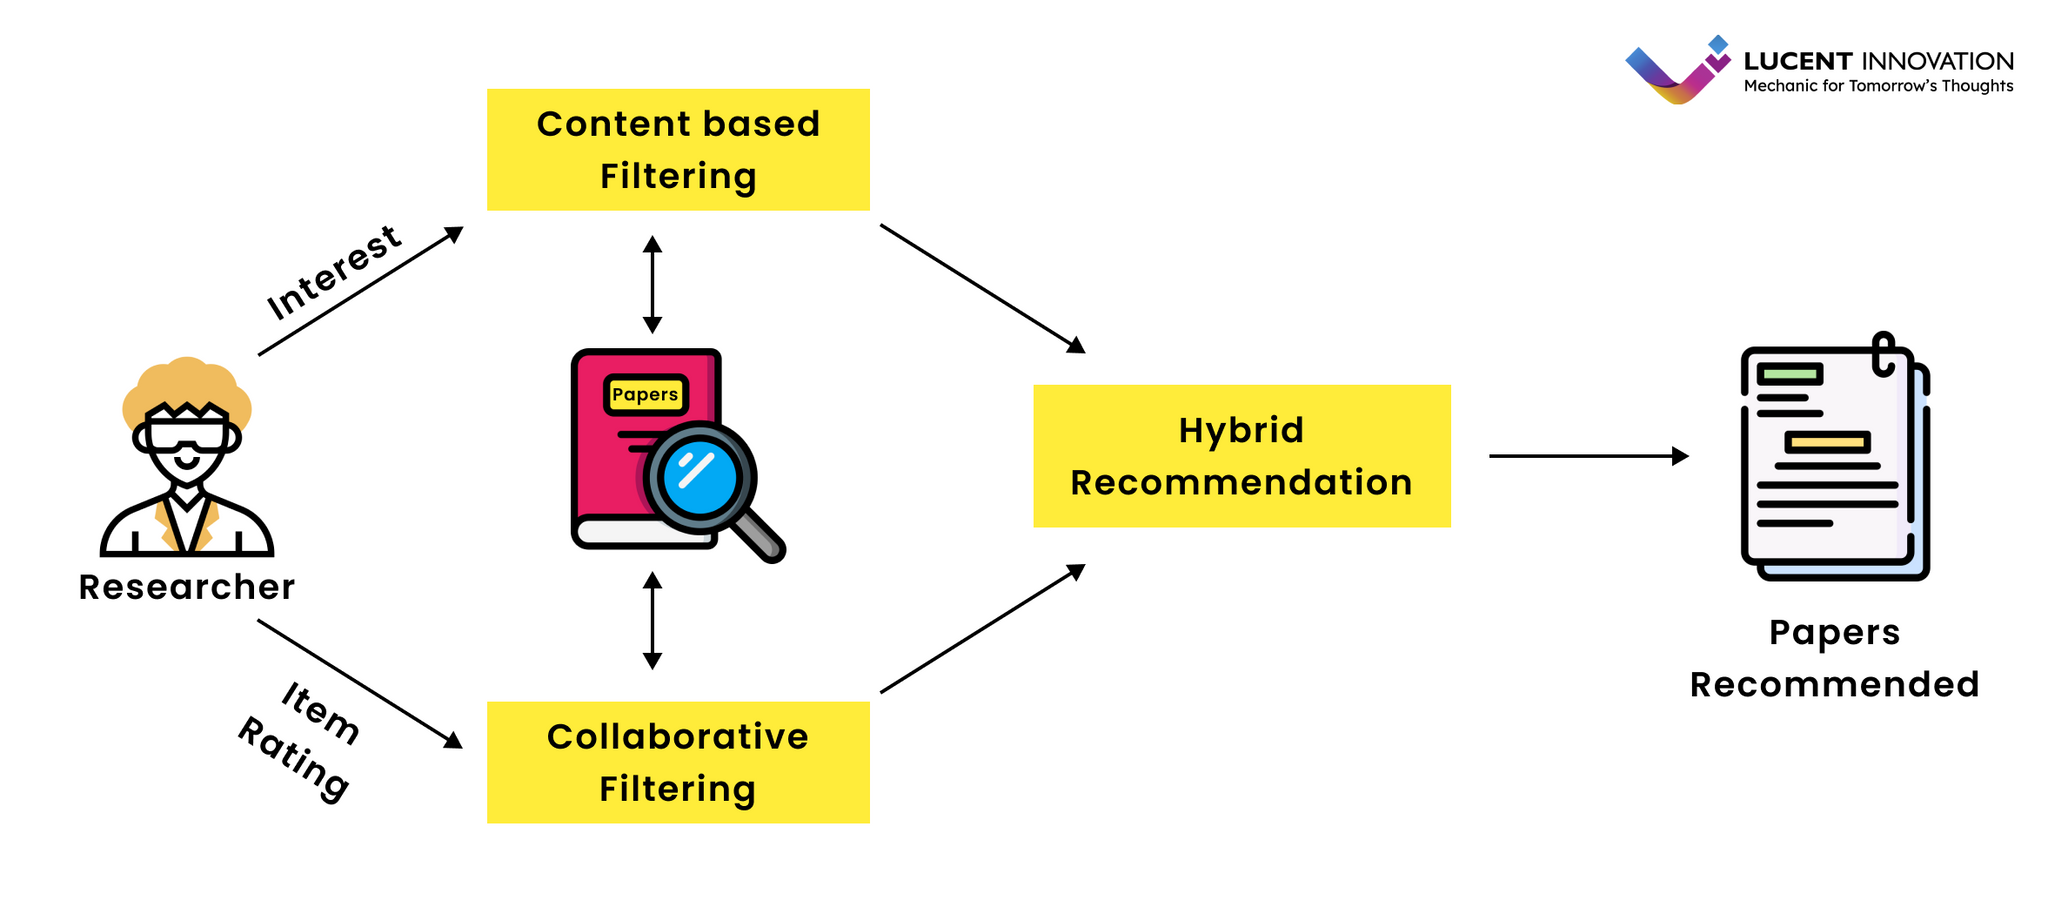 Hybrid Models - Recommendation System